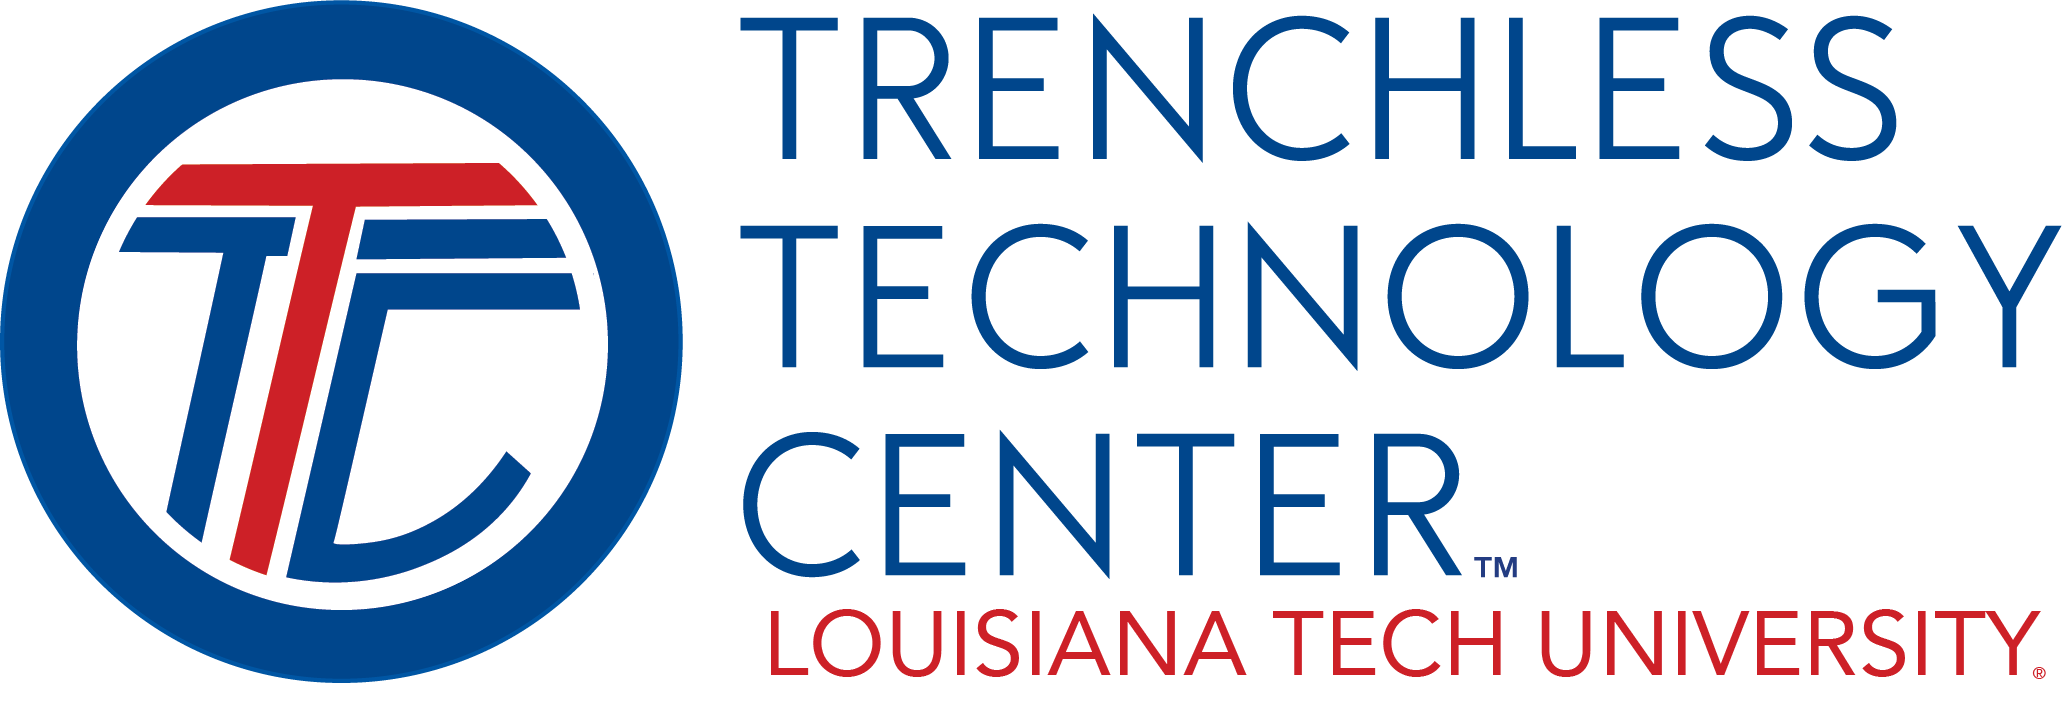 Trenchless Technology Center Louisiana Tech University Logo